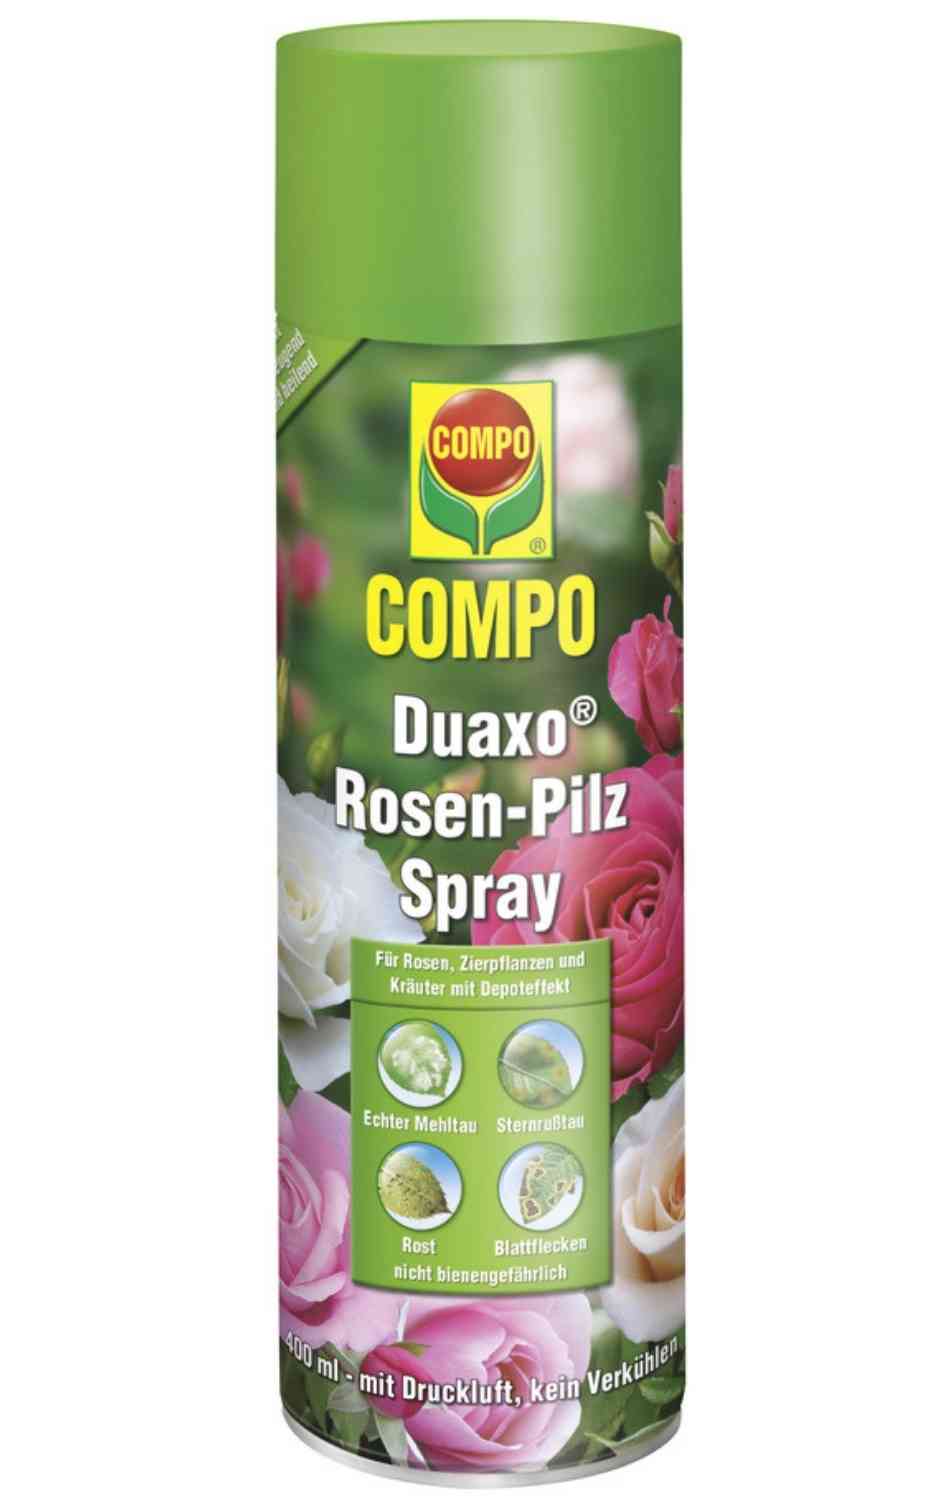 Compo Duaxo Rosen-Pilz Spray